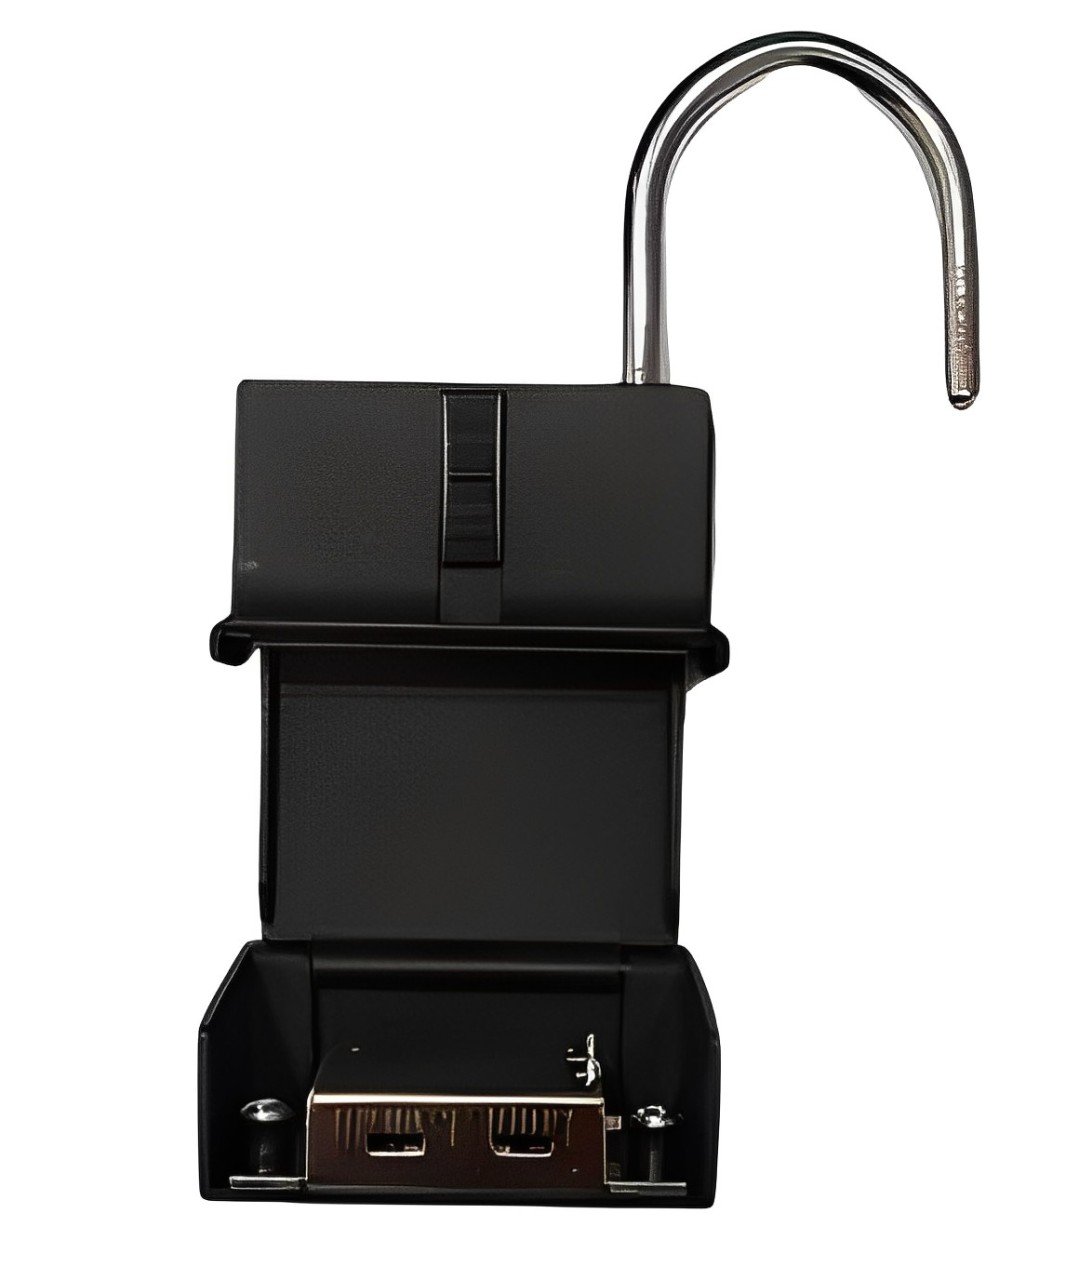 Cadeado Alarm Lock Modelo Kl0101k de 4 Digitos para Guardar Chaves - 4